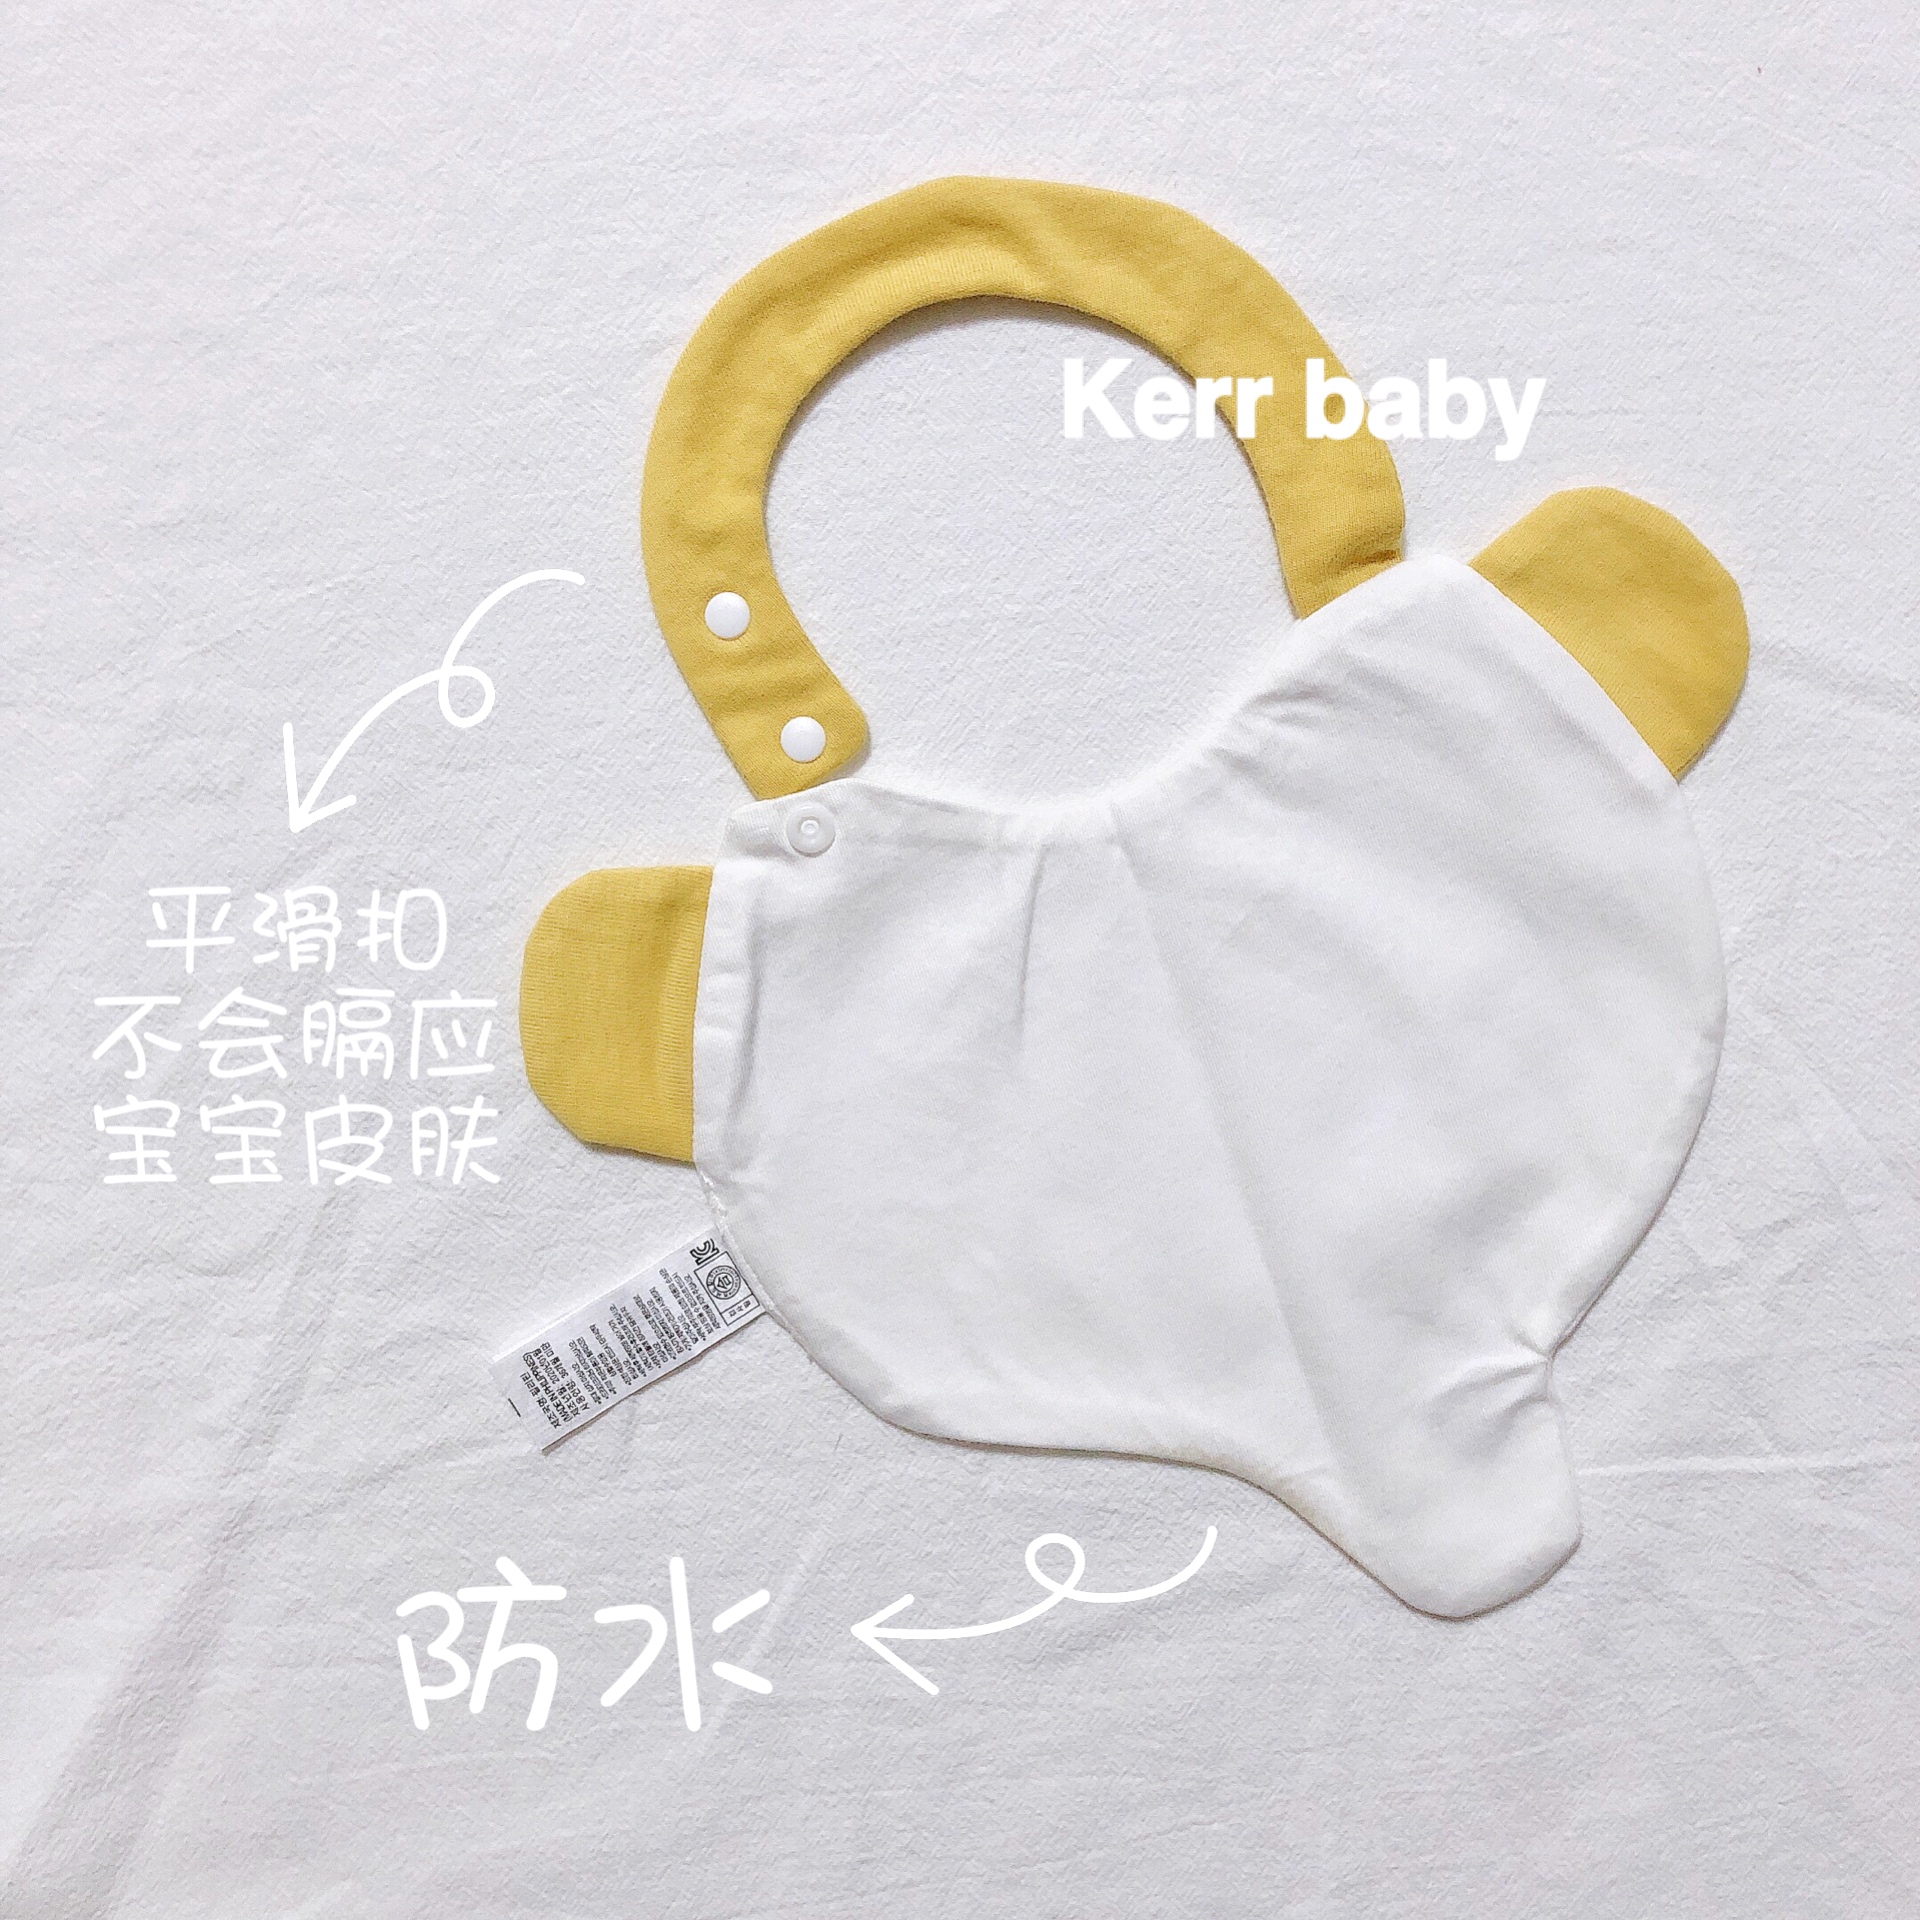 Kerr baby 韩国ins宝宝可爱动物纯棉防水围嘴婴儿洋气柔软口水巾 - 图2